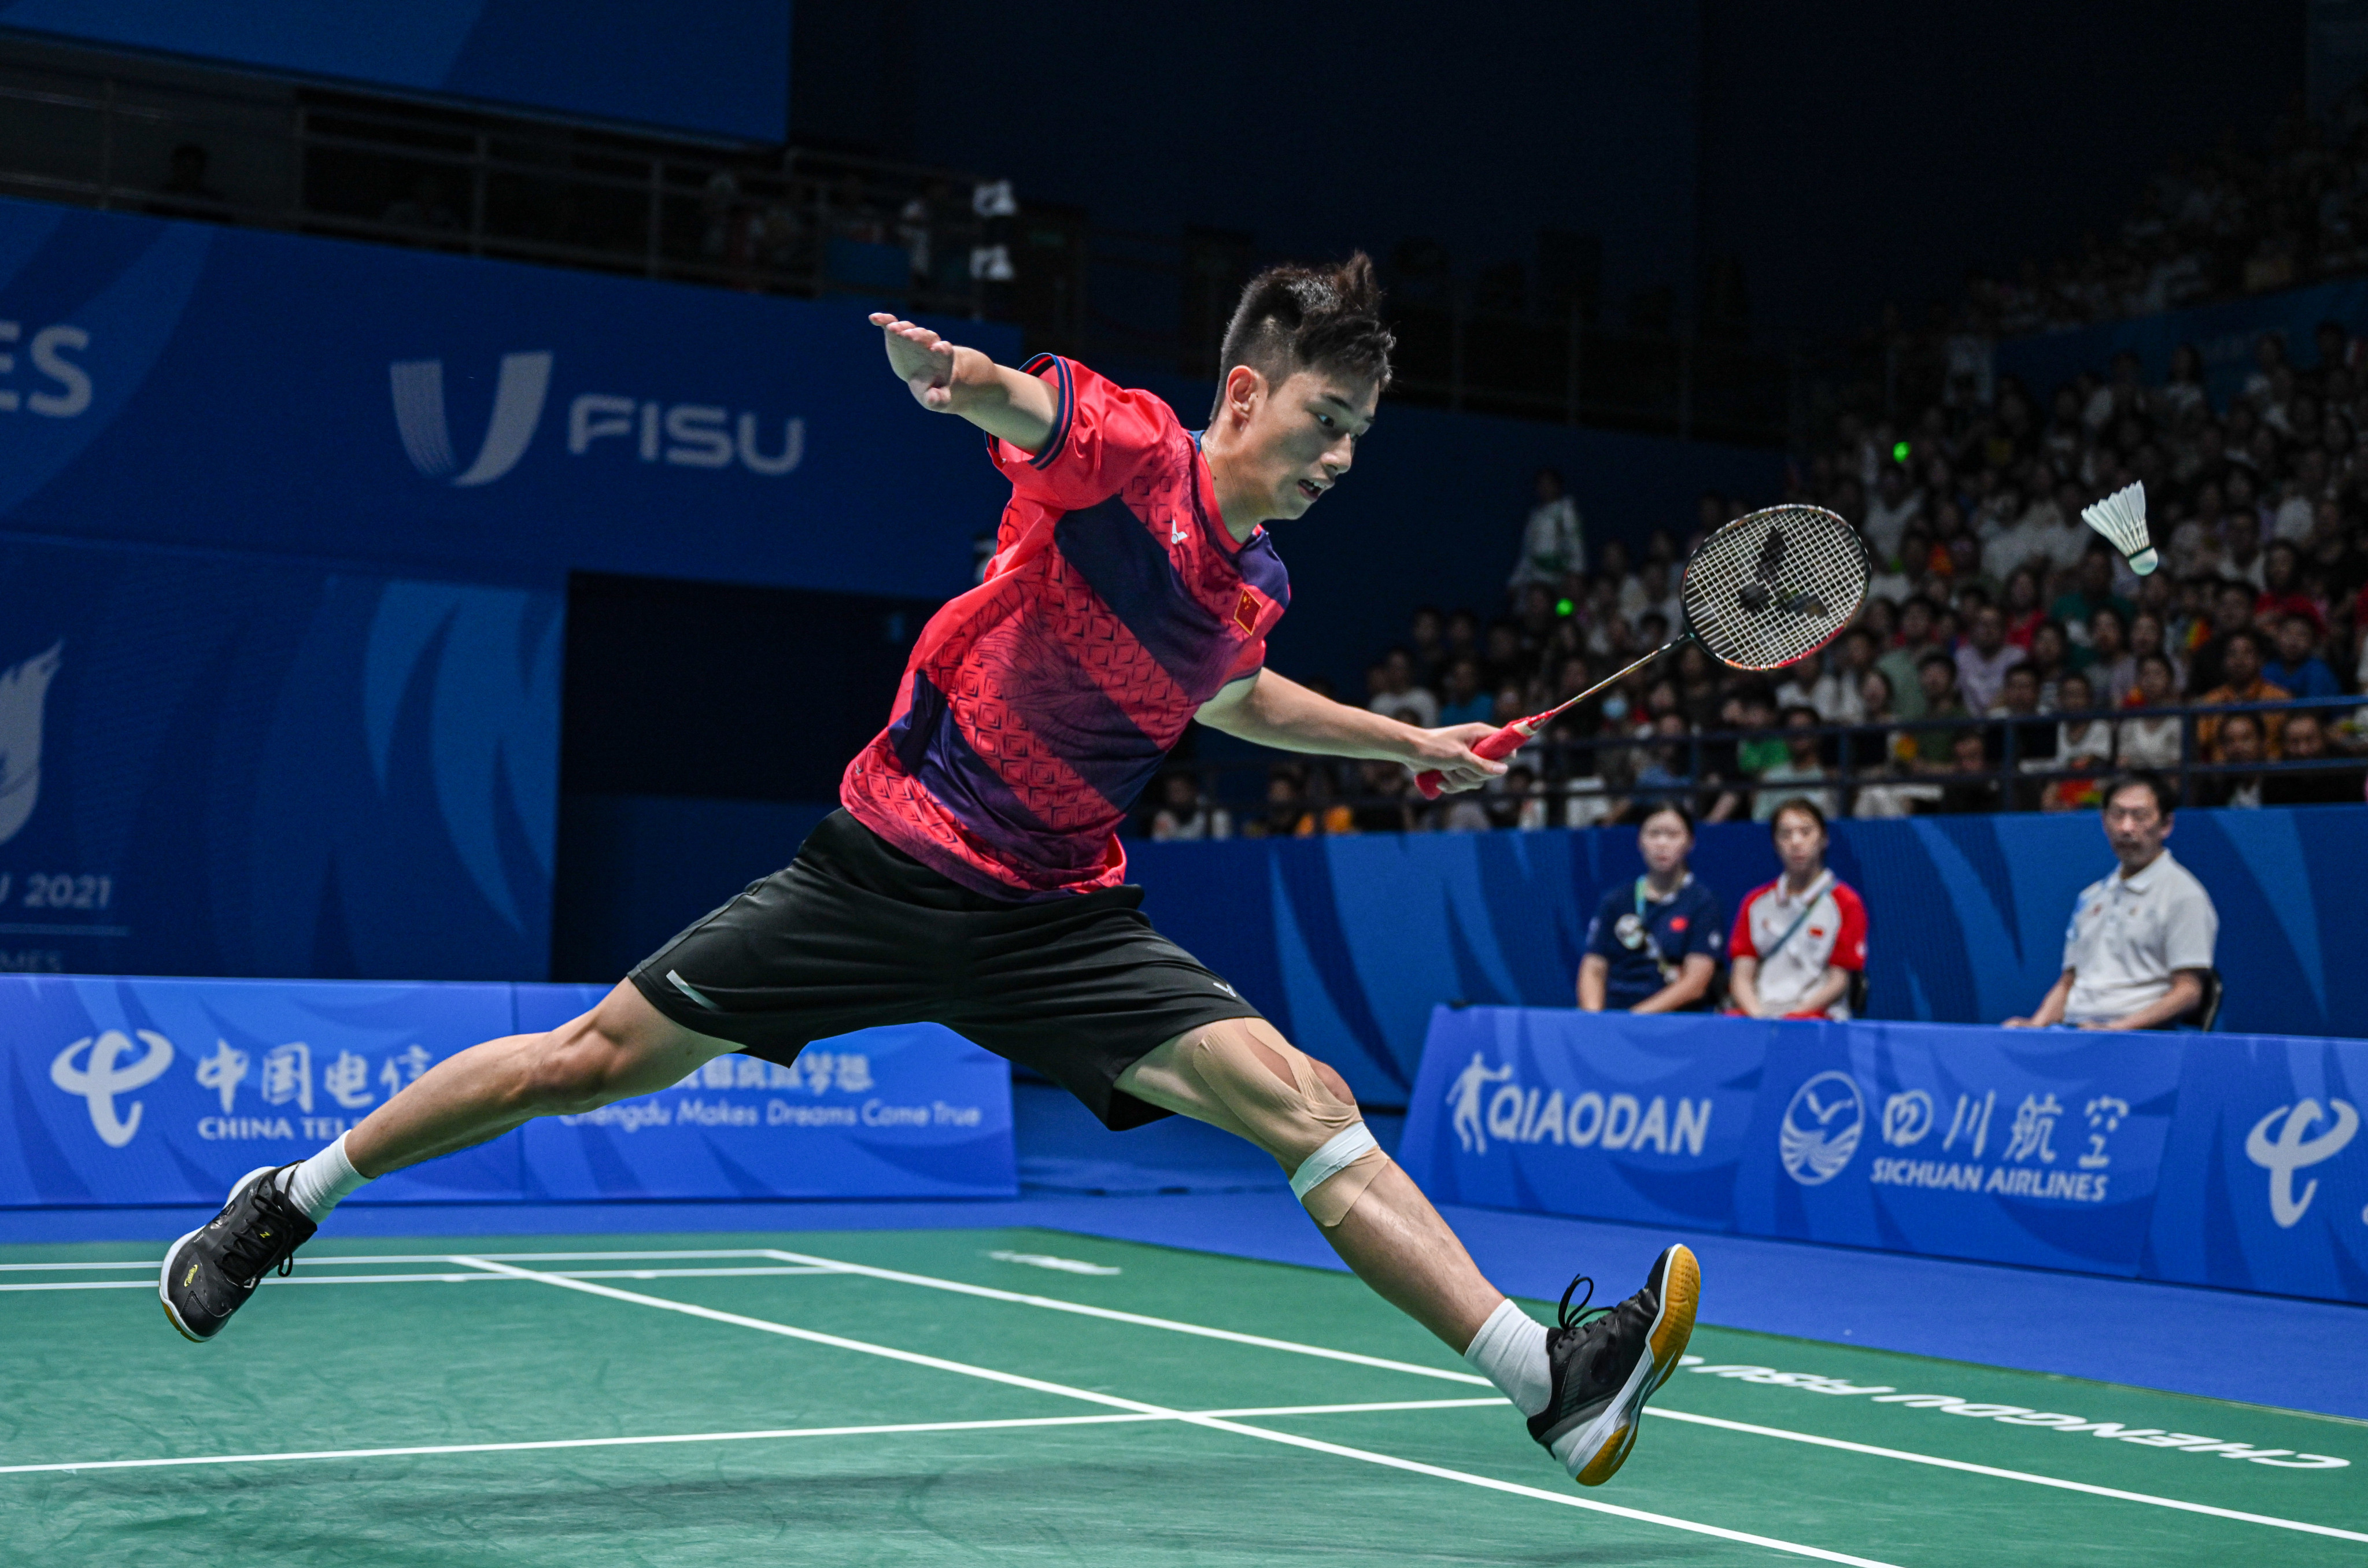 China’s Wang Zhengxing competes during the men’s final against Panitchaphon Teeraratsakul of Thailand at the 31st FISU Summer World University Games in Chengdu on August 7. Photo: Xinhua